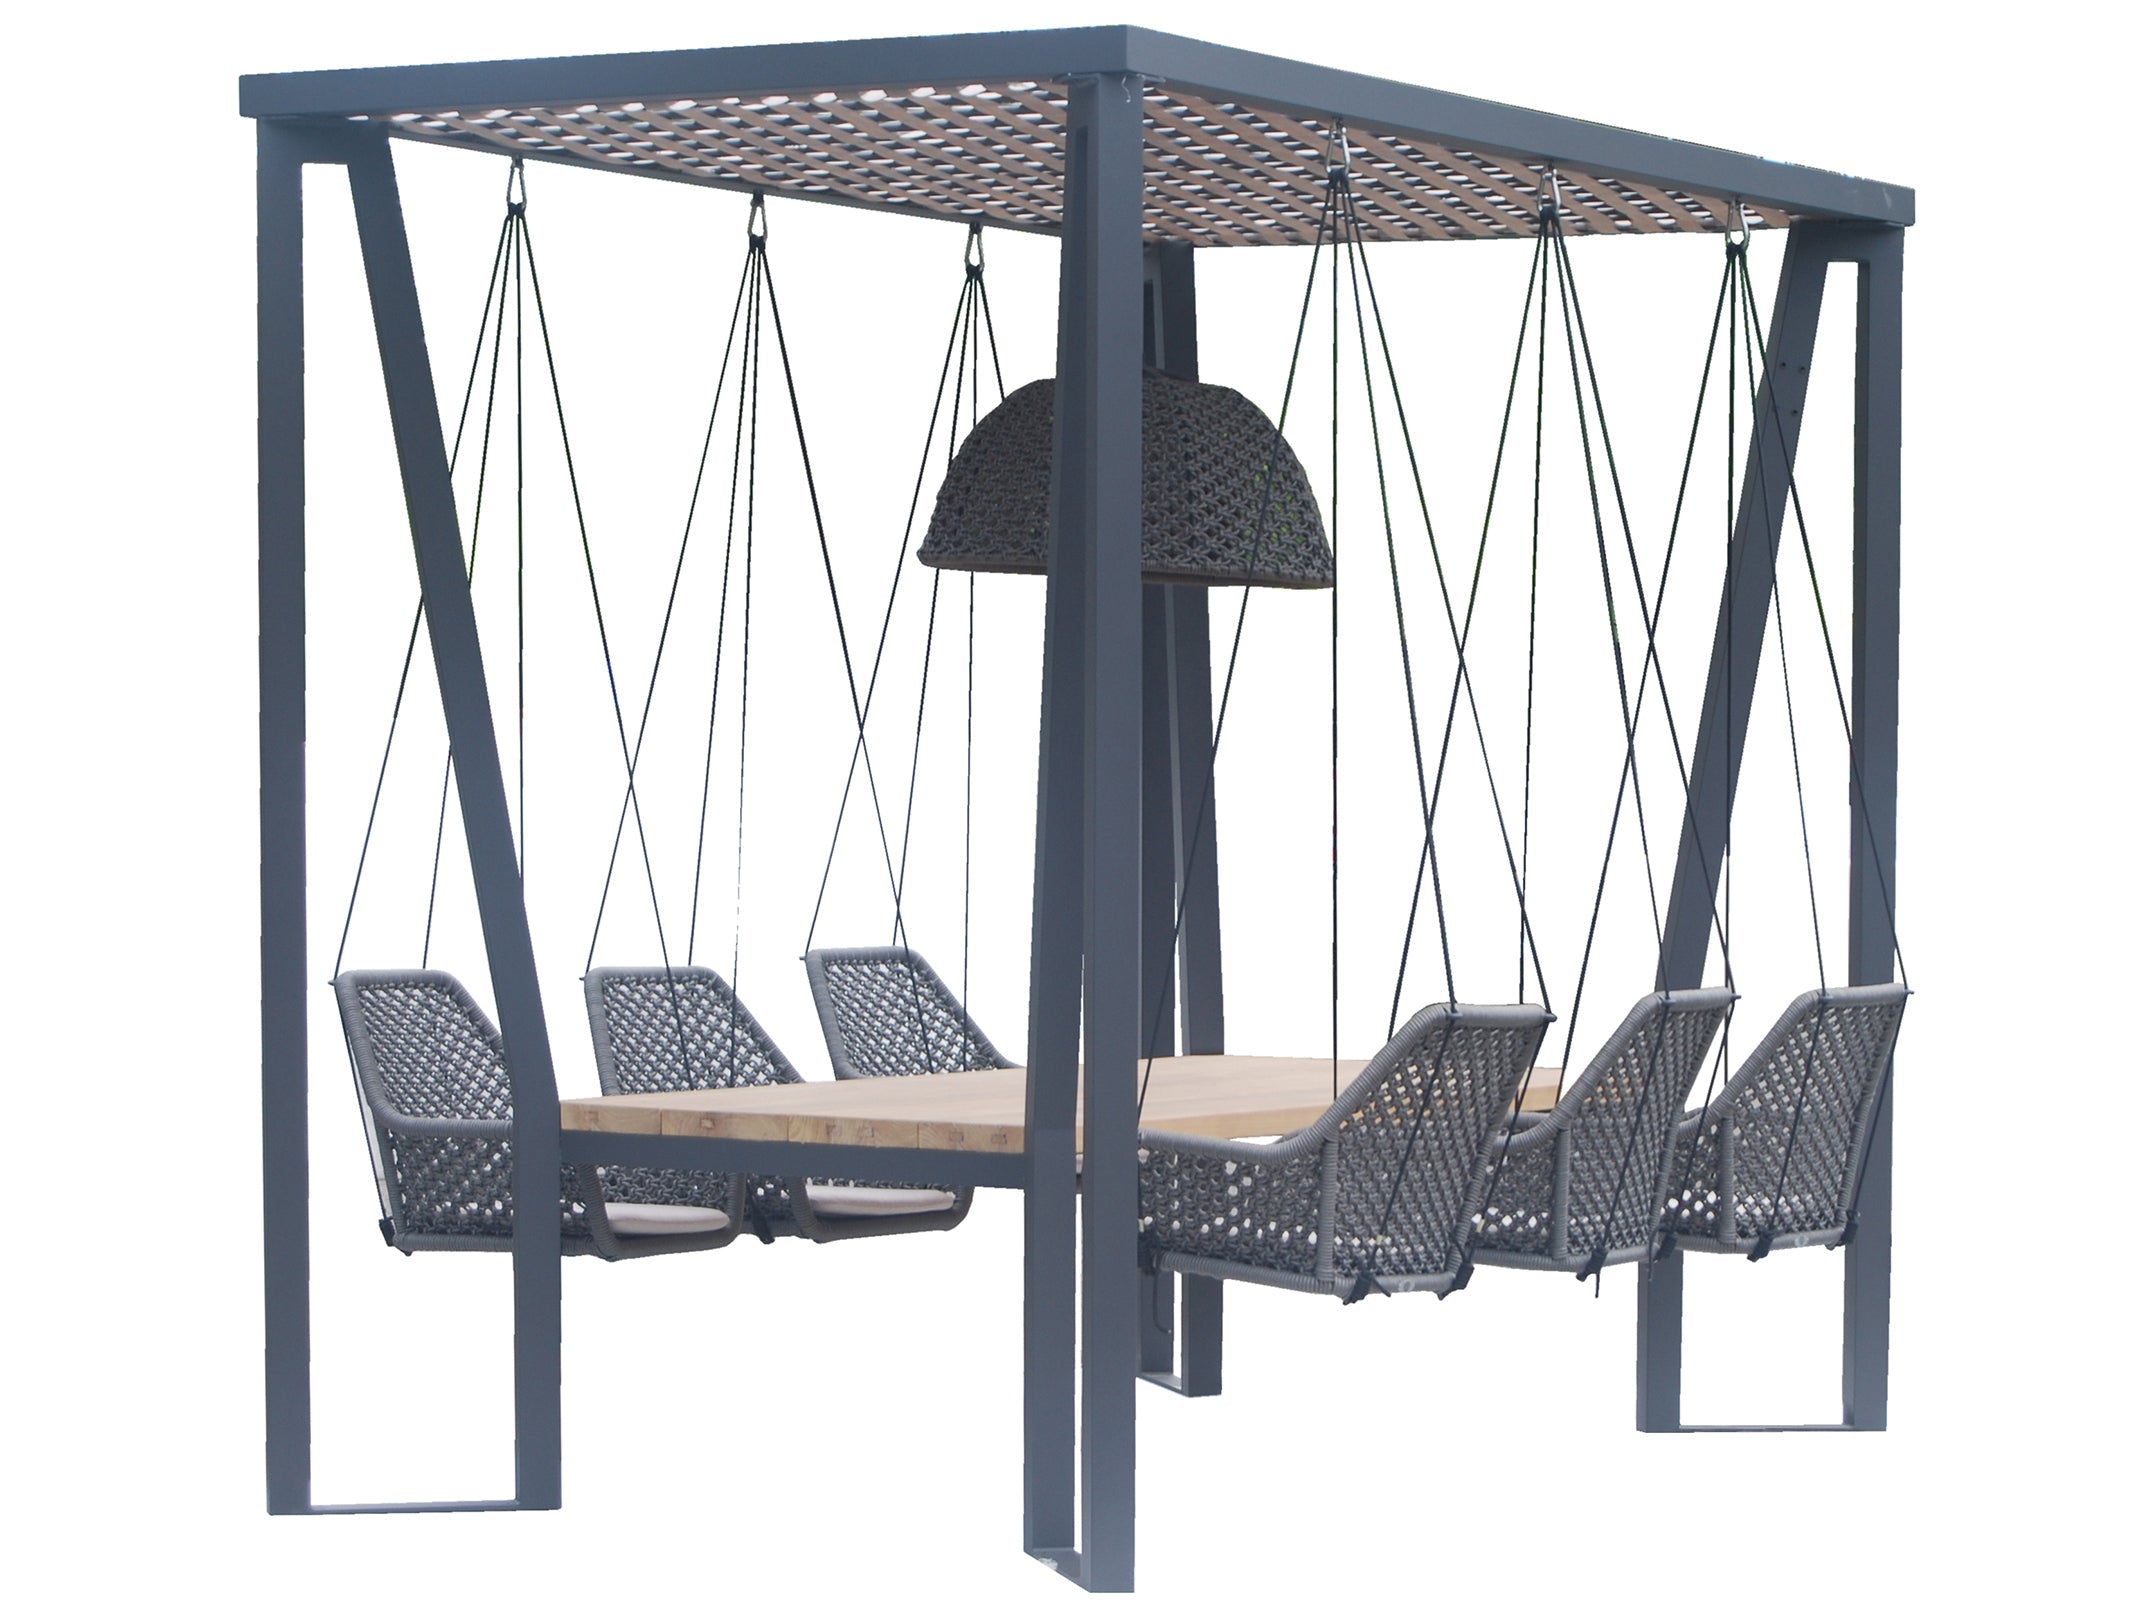 Skyline Design Horizon Pergola with Lamp Hanging Chairs & Teak Table